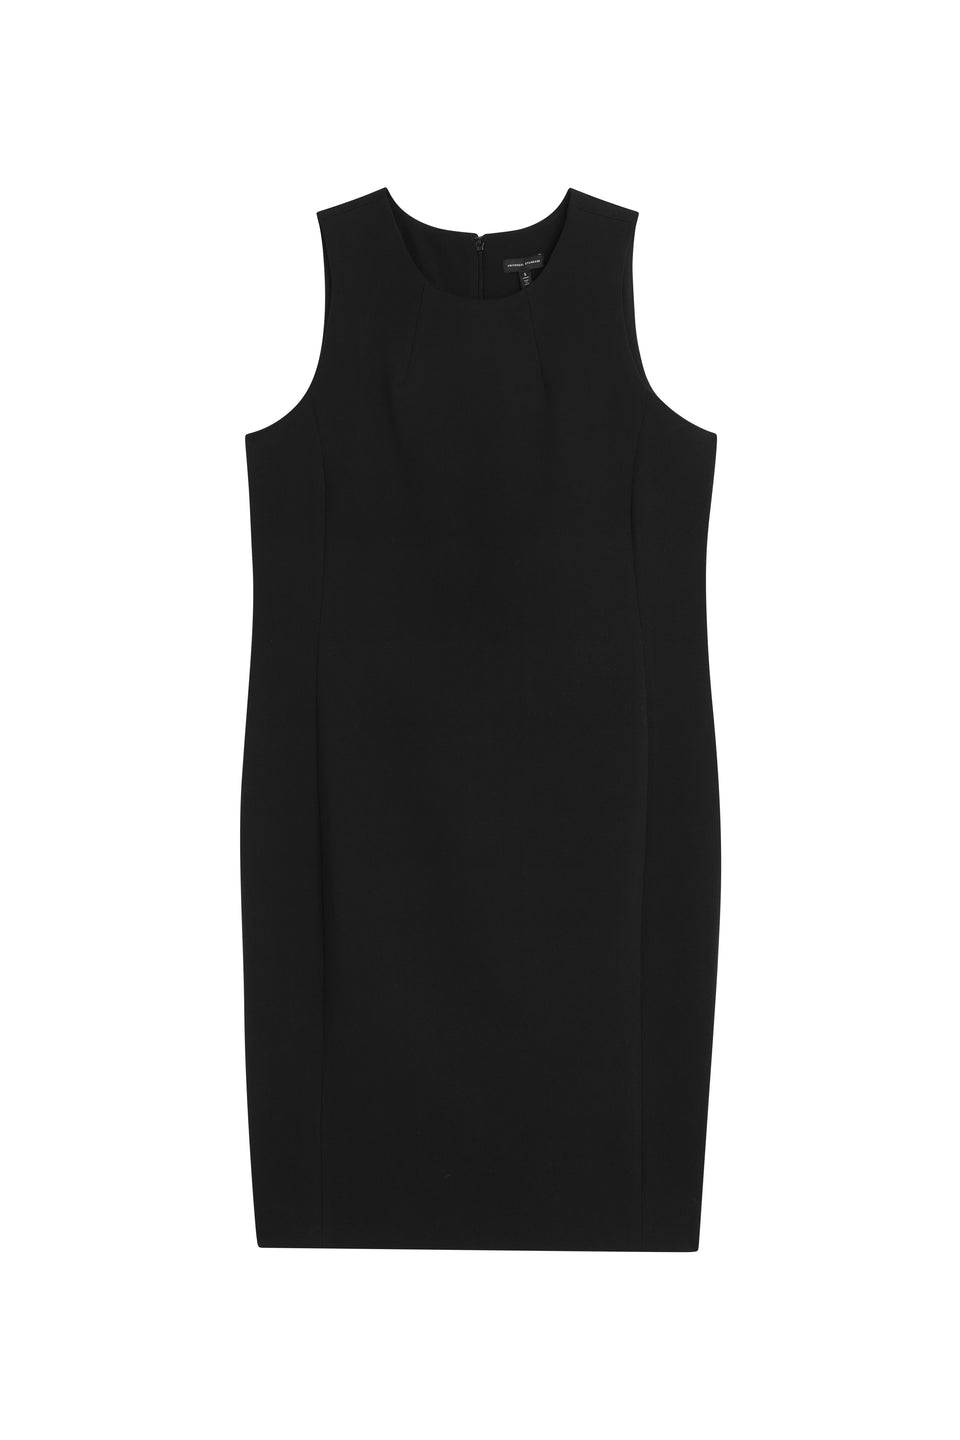 Henning x US Carlisle Crepe Dress - Black | Universal Standard